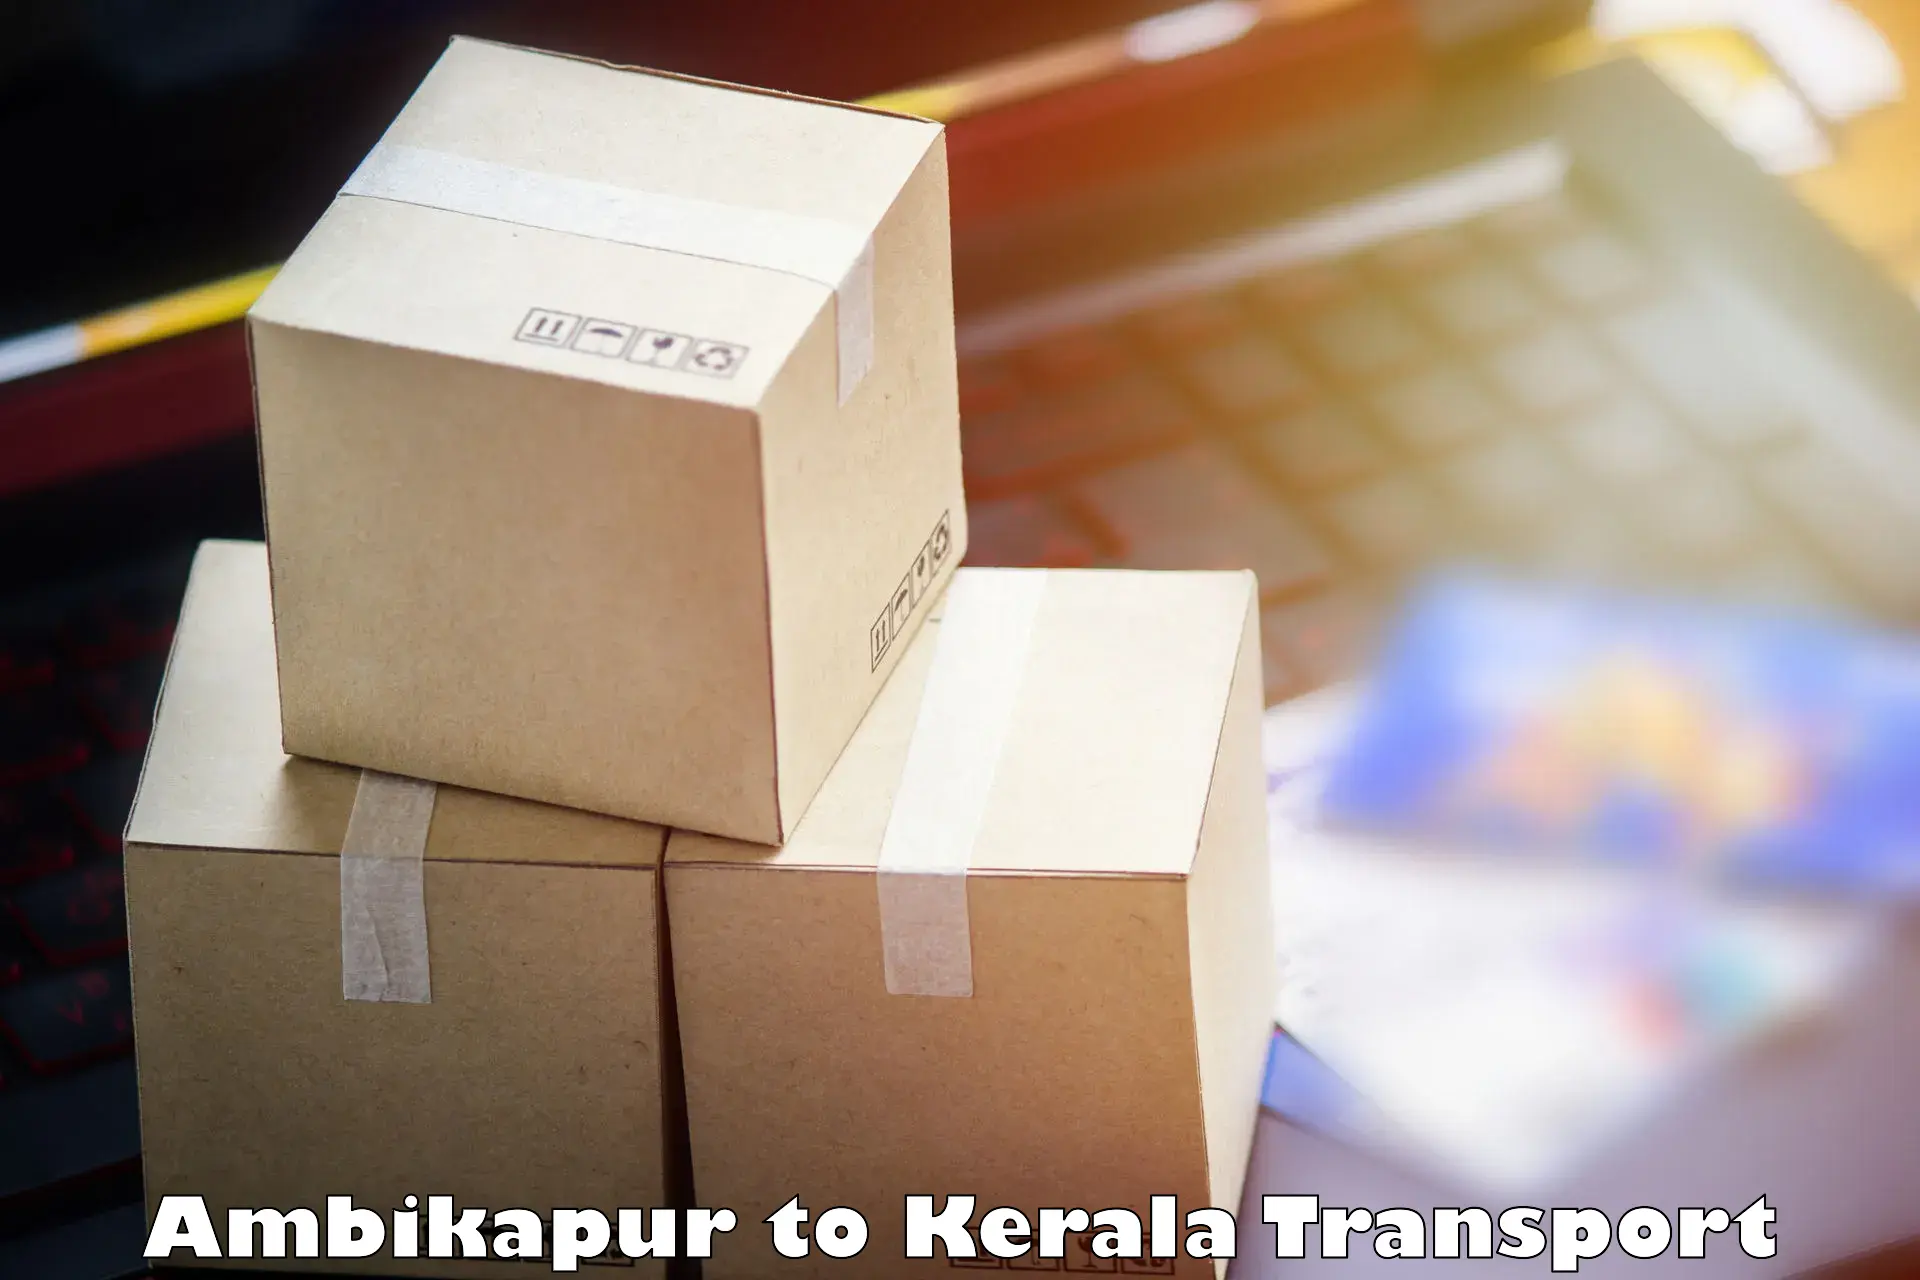 Delivery service Ambikapur to Thiruvananthapuram